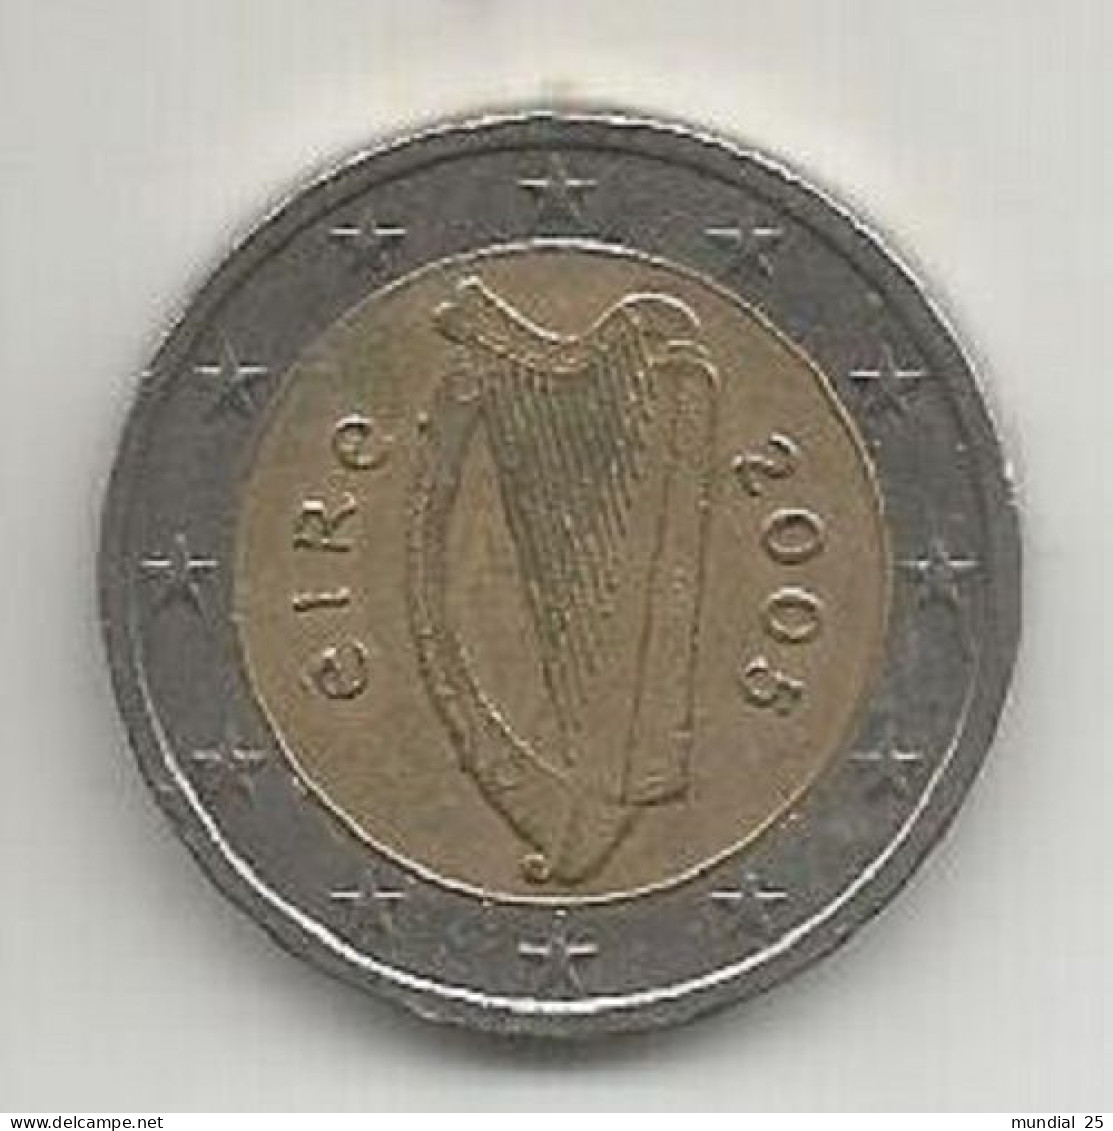 IRELAND 2 EURO 2005 - Ireland